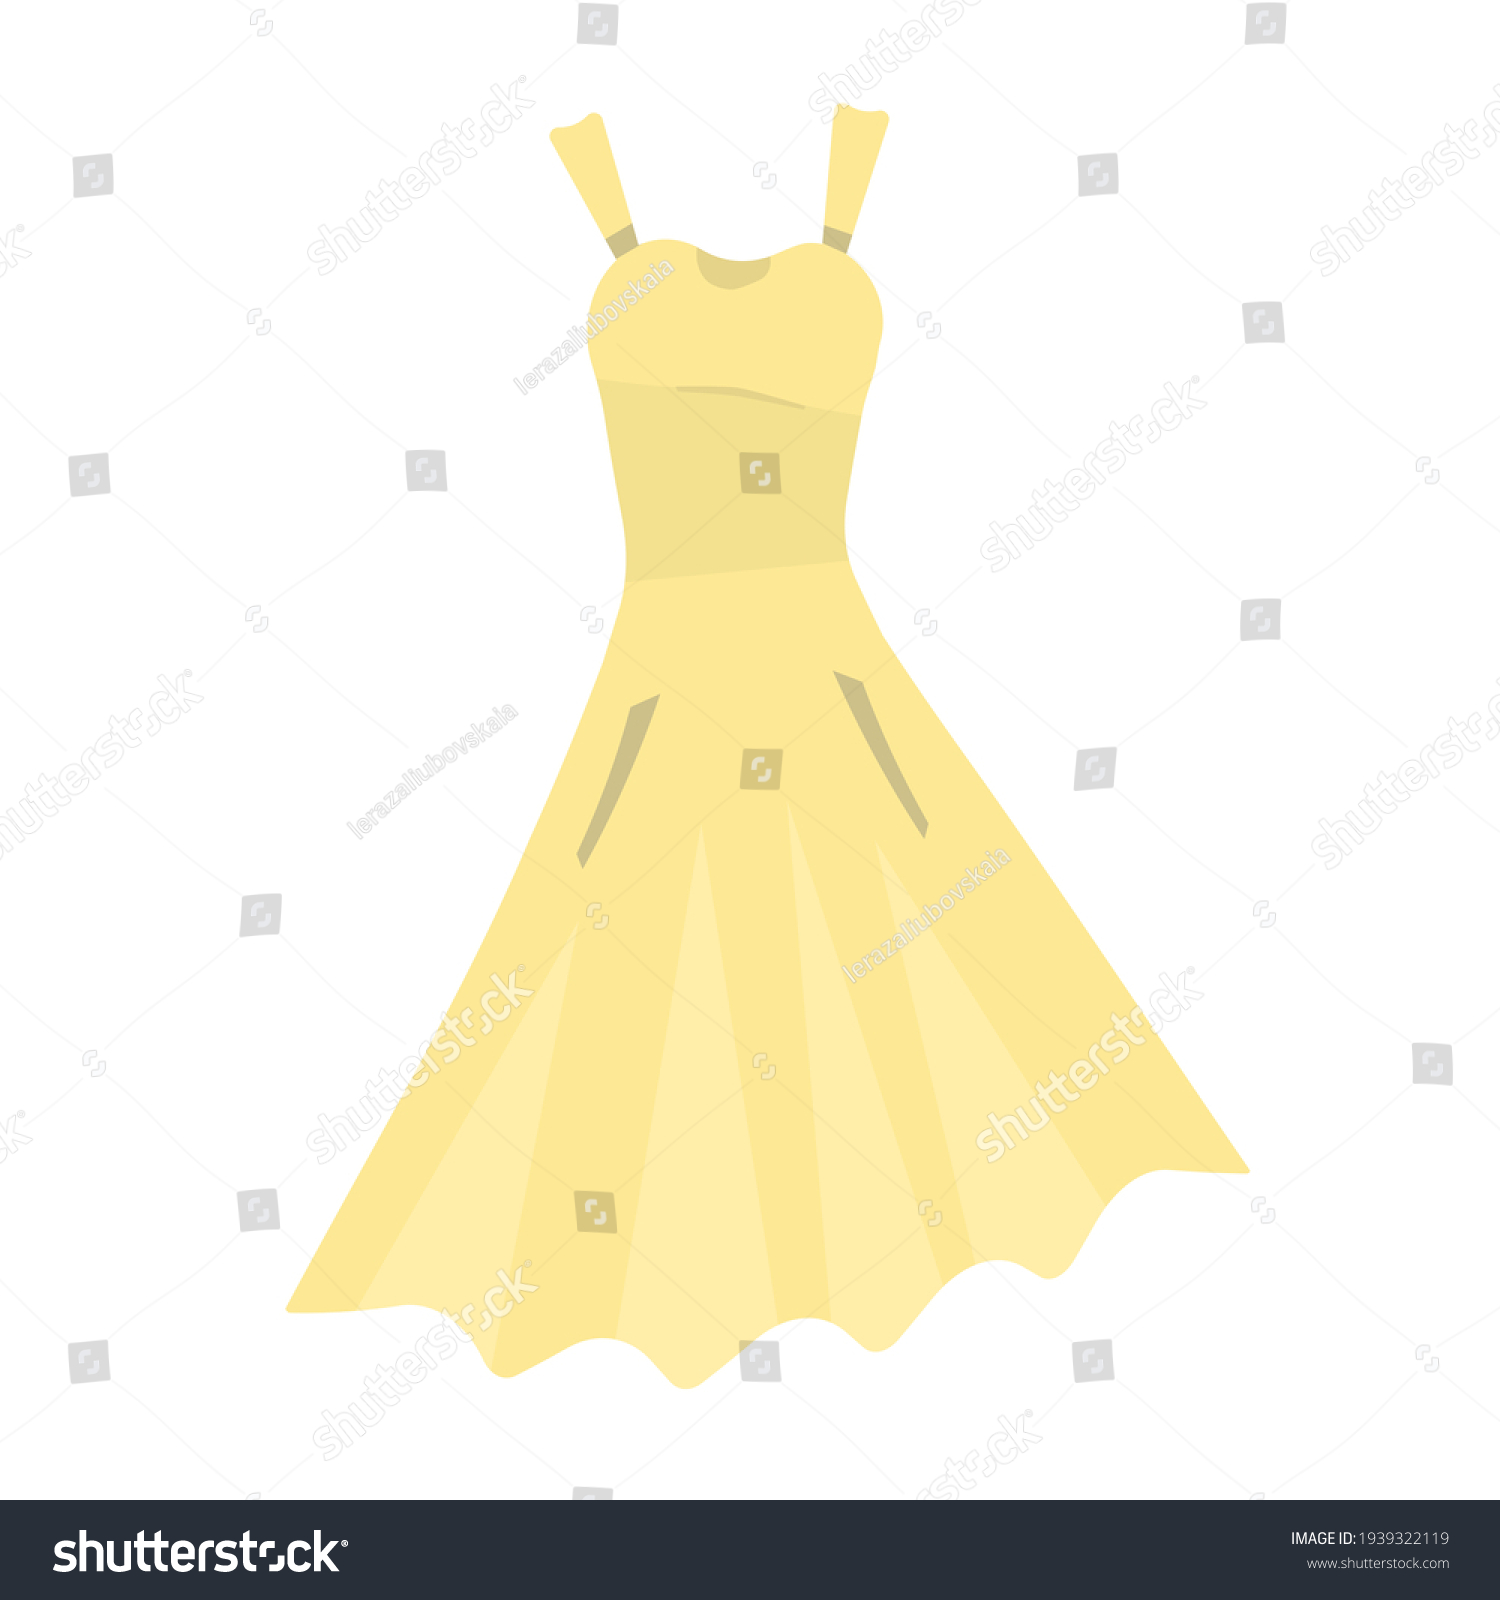 Summer dresses Images, Stock Photos & Vectors | Shutterstock